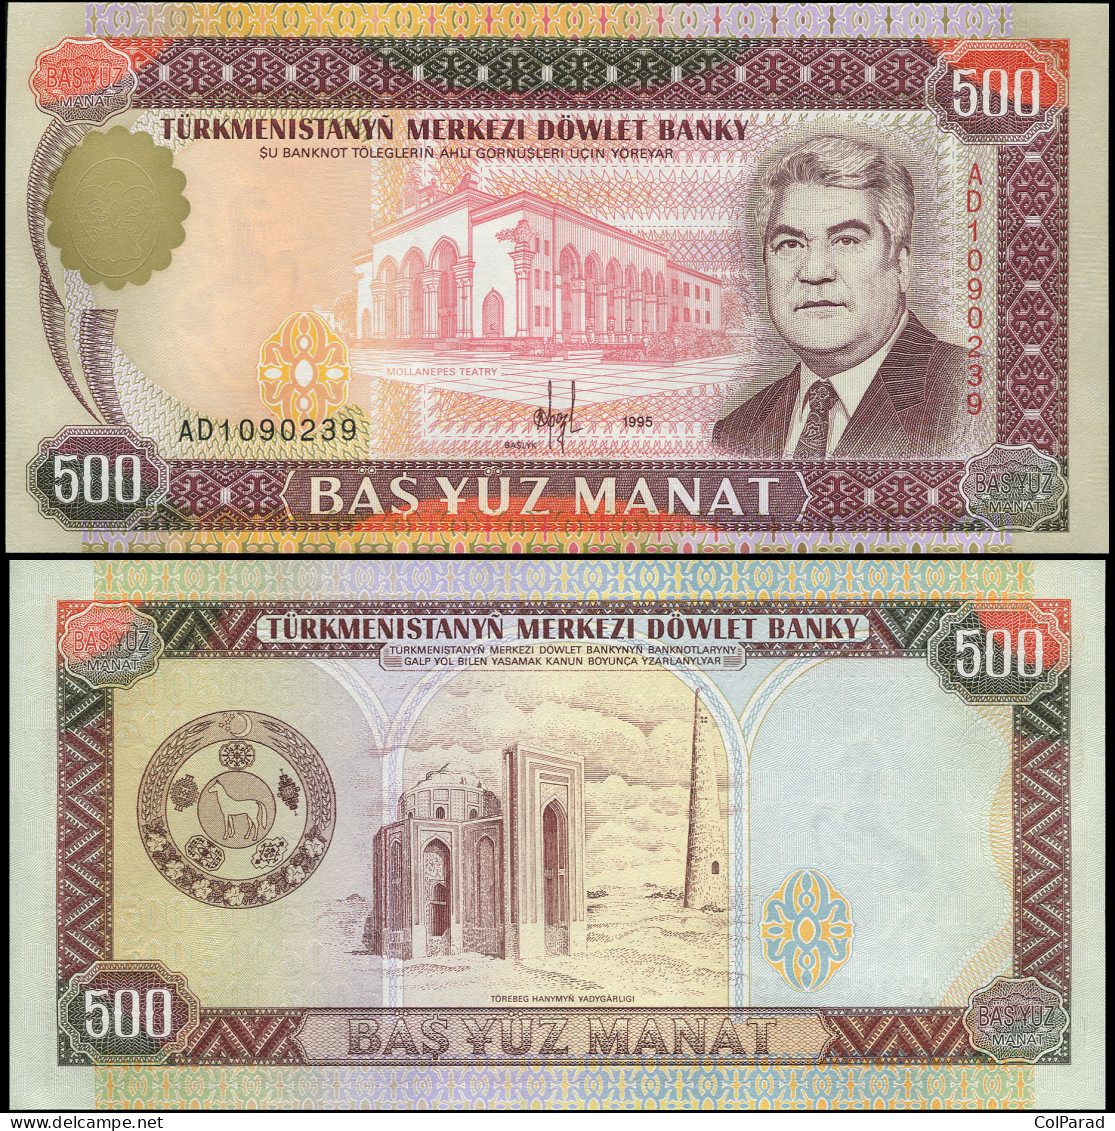 TURKMENISTAN 500 MANAT - 1995 - Paper Unc - P.7b Banknote - Turkmenistan